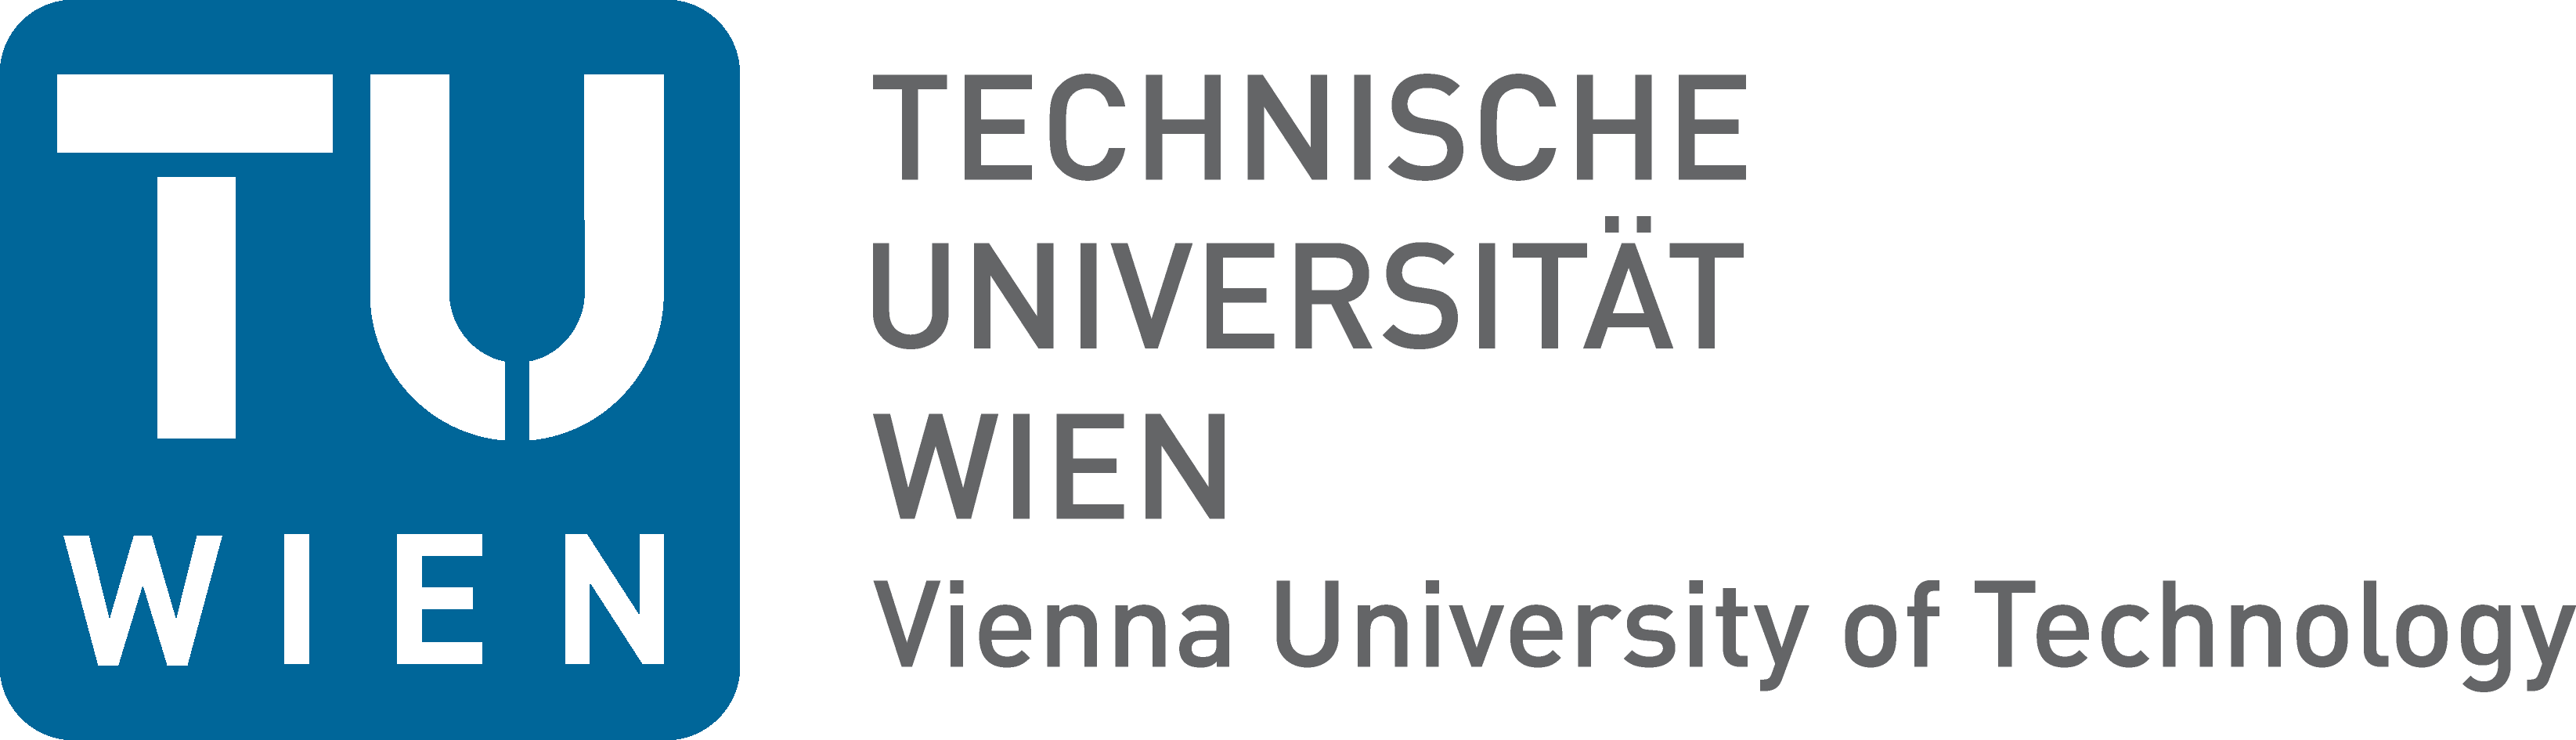 Technischen Universitt Wien